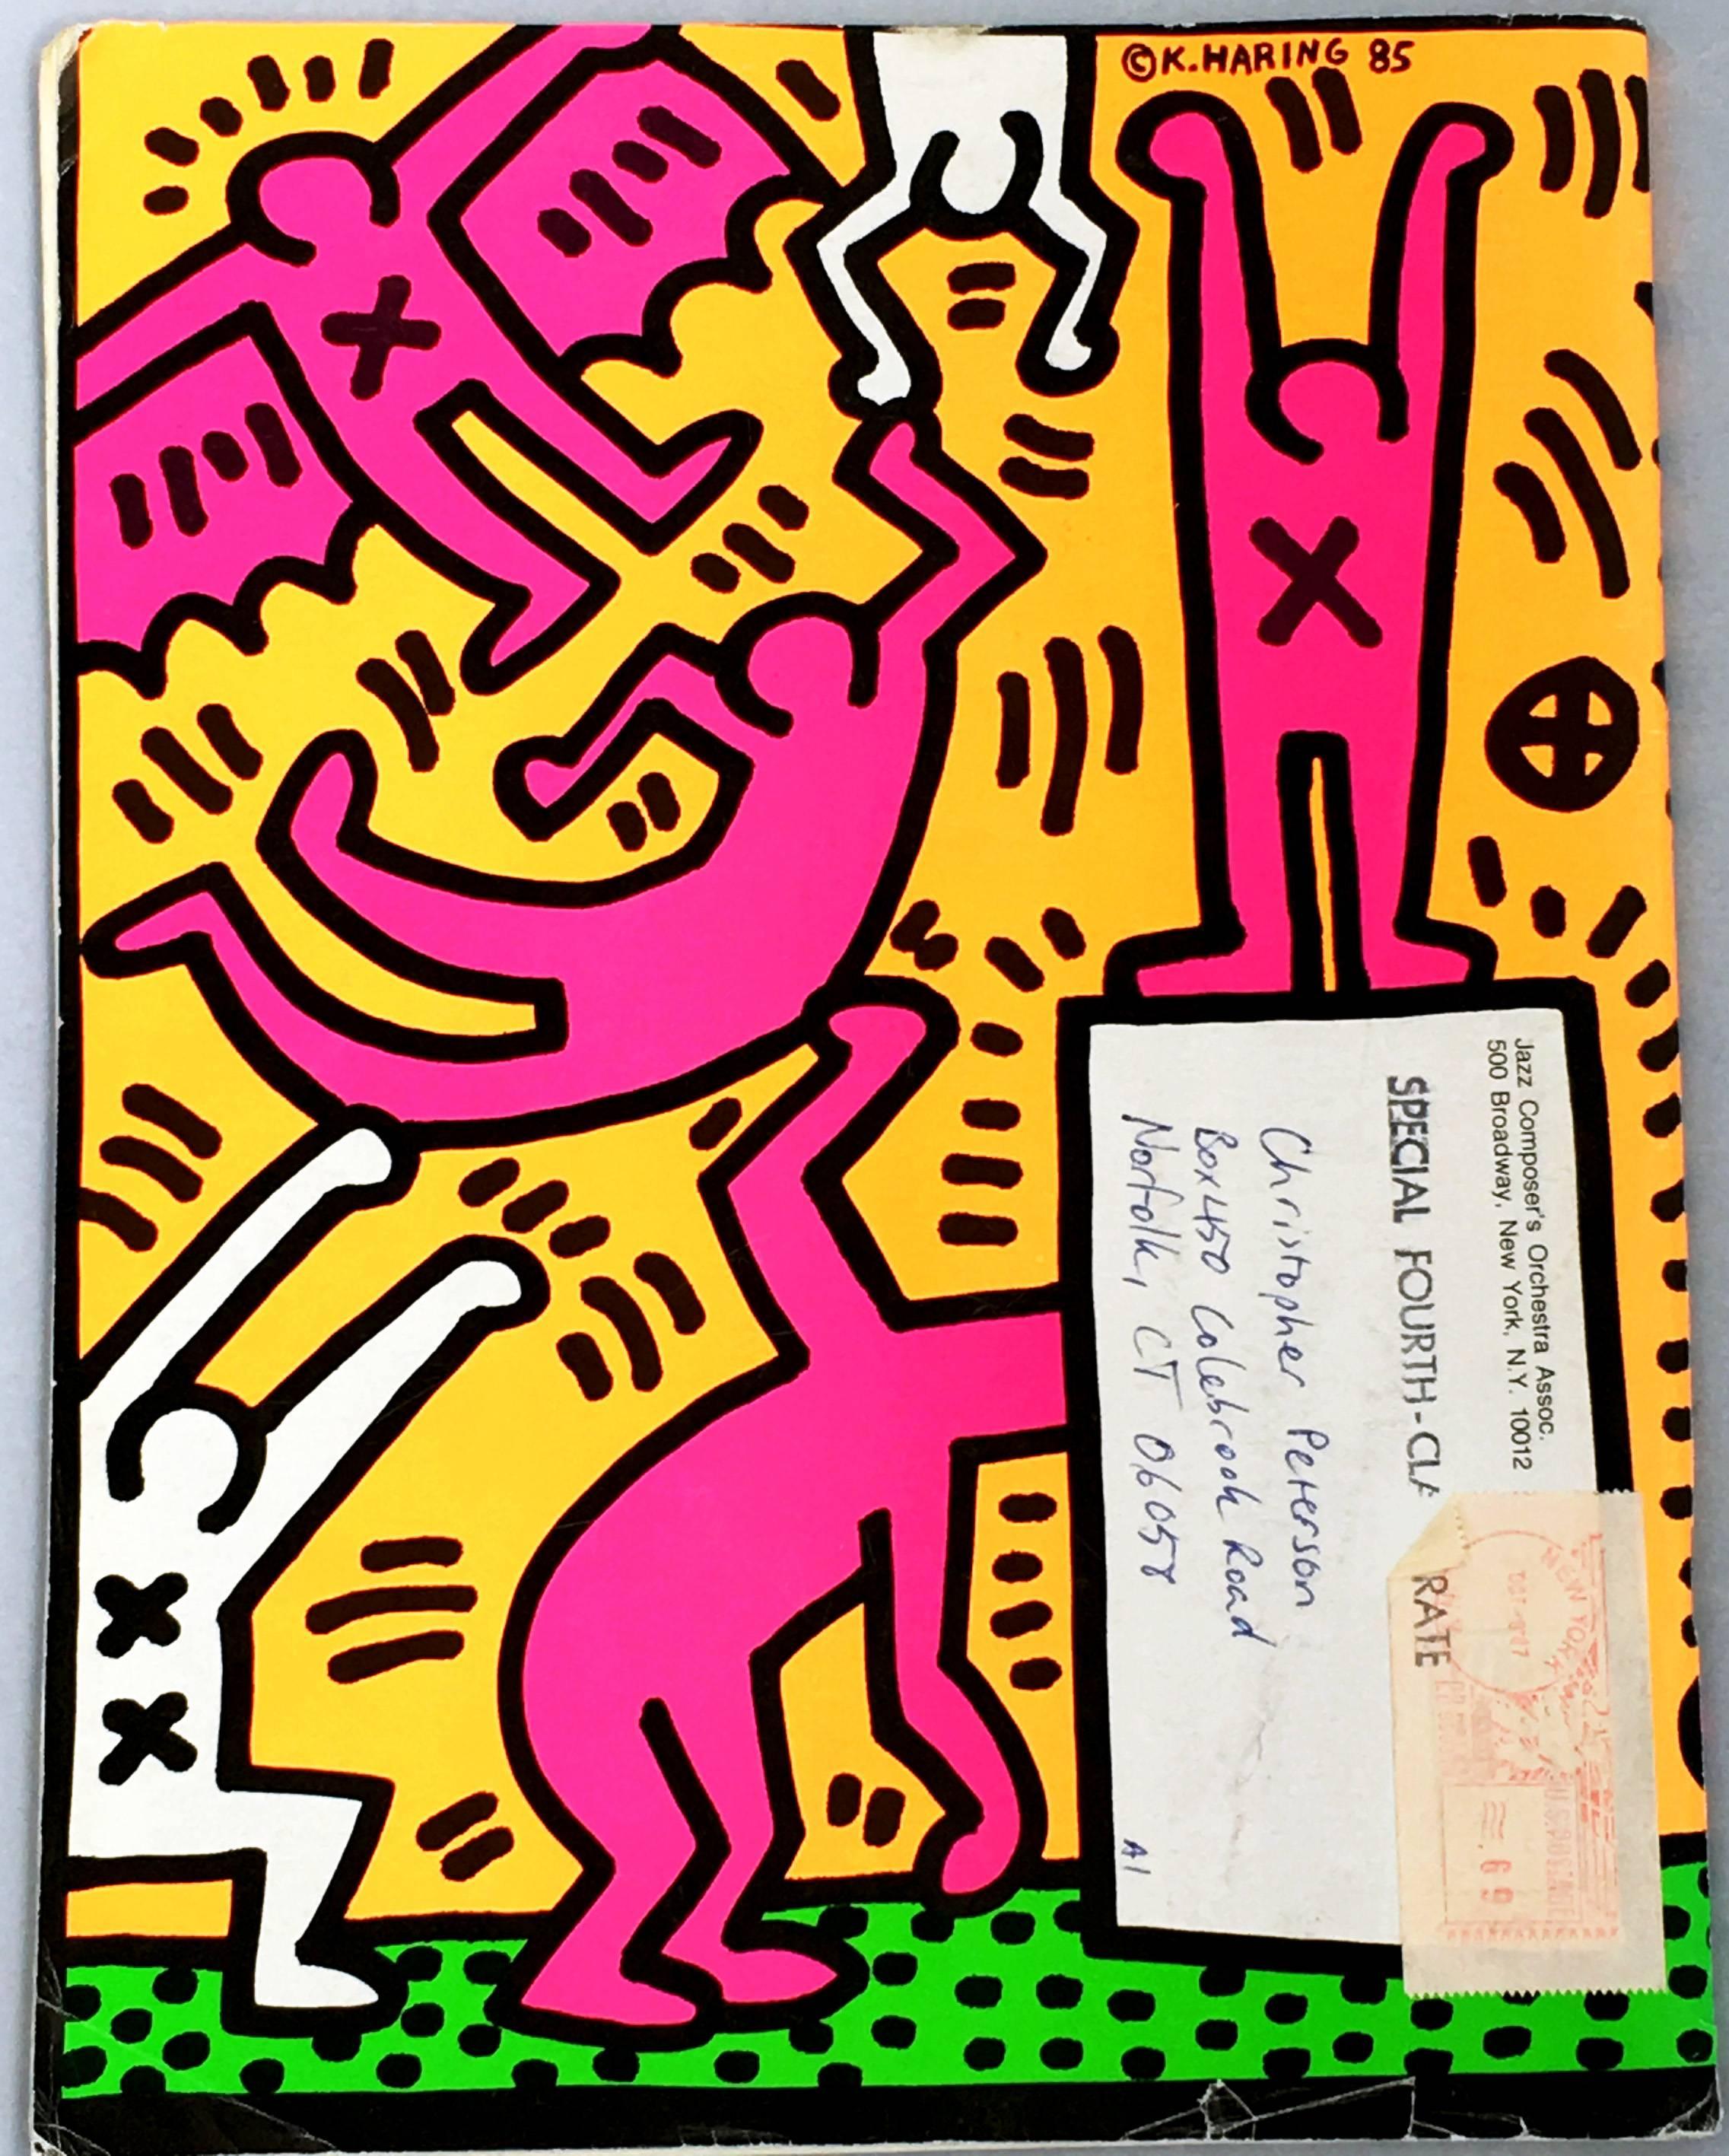 Rare original Keith Haring cover art  4